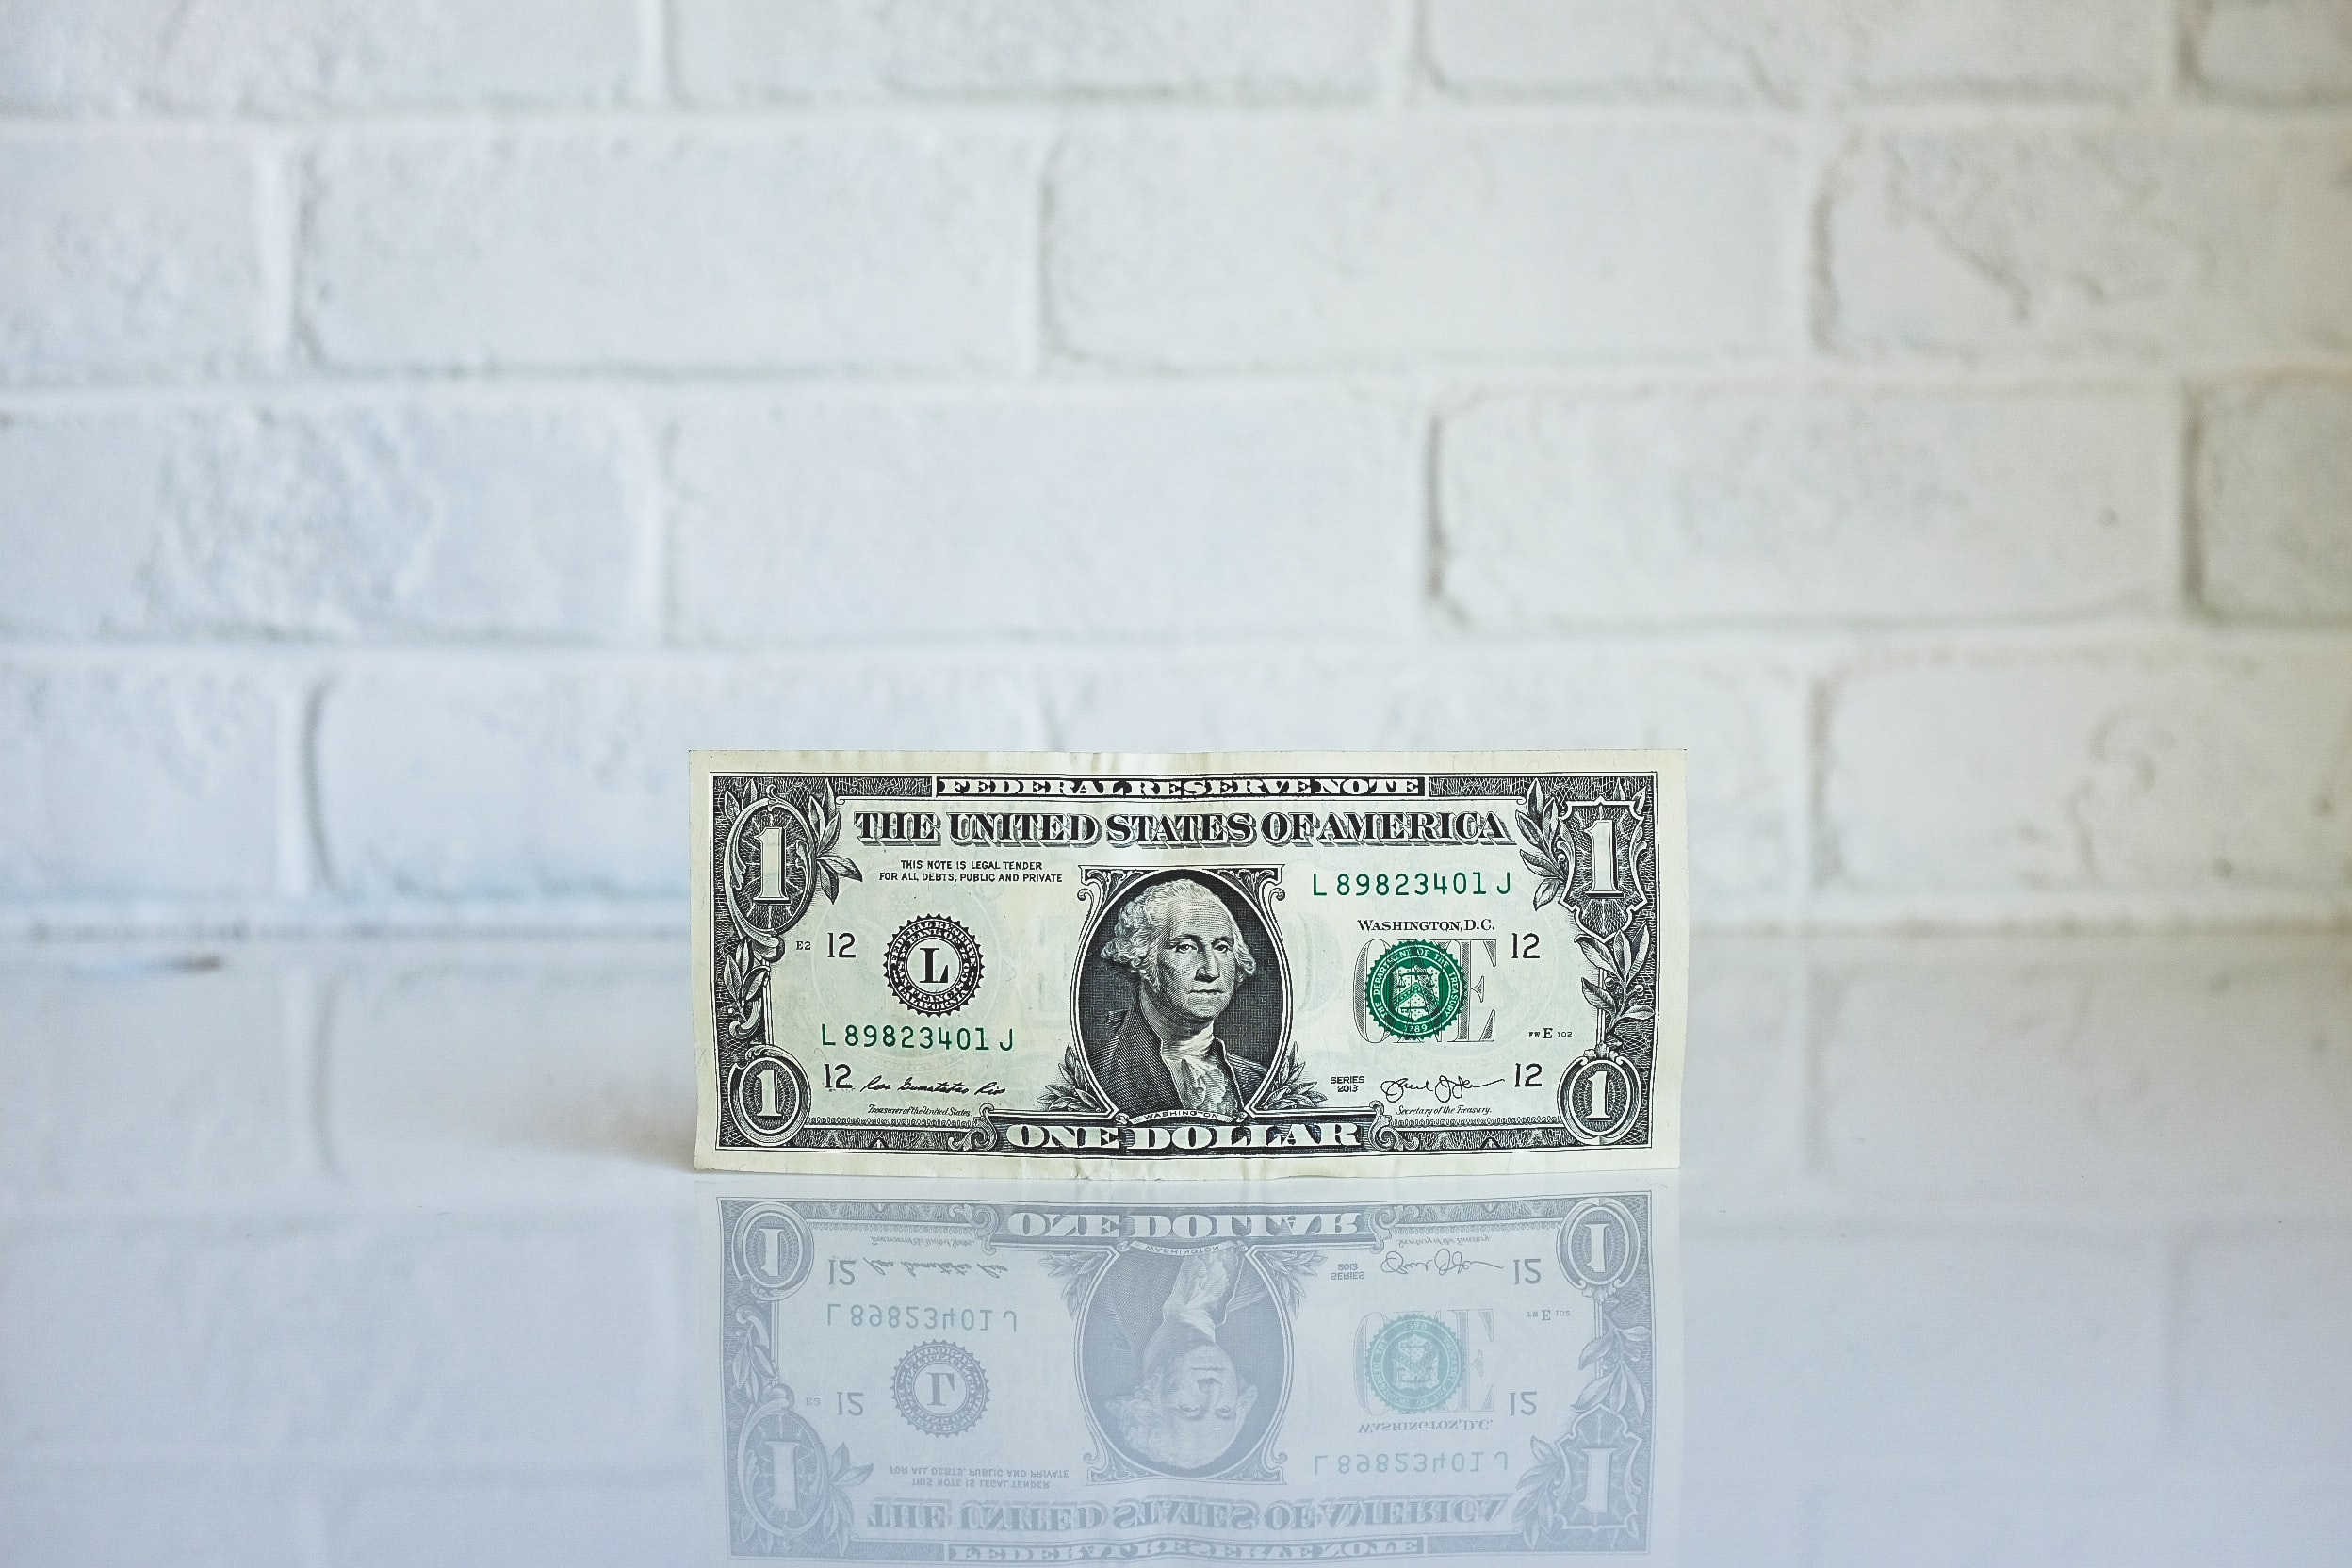 Image of a U.S. dollar bill